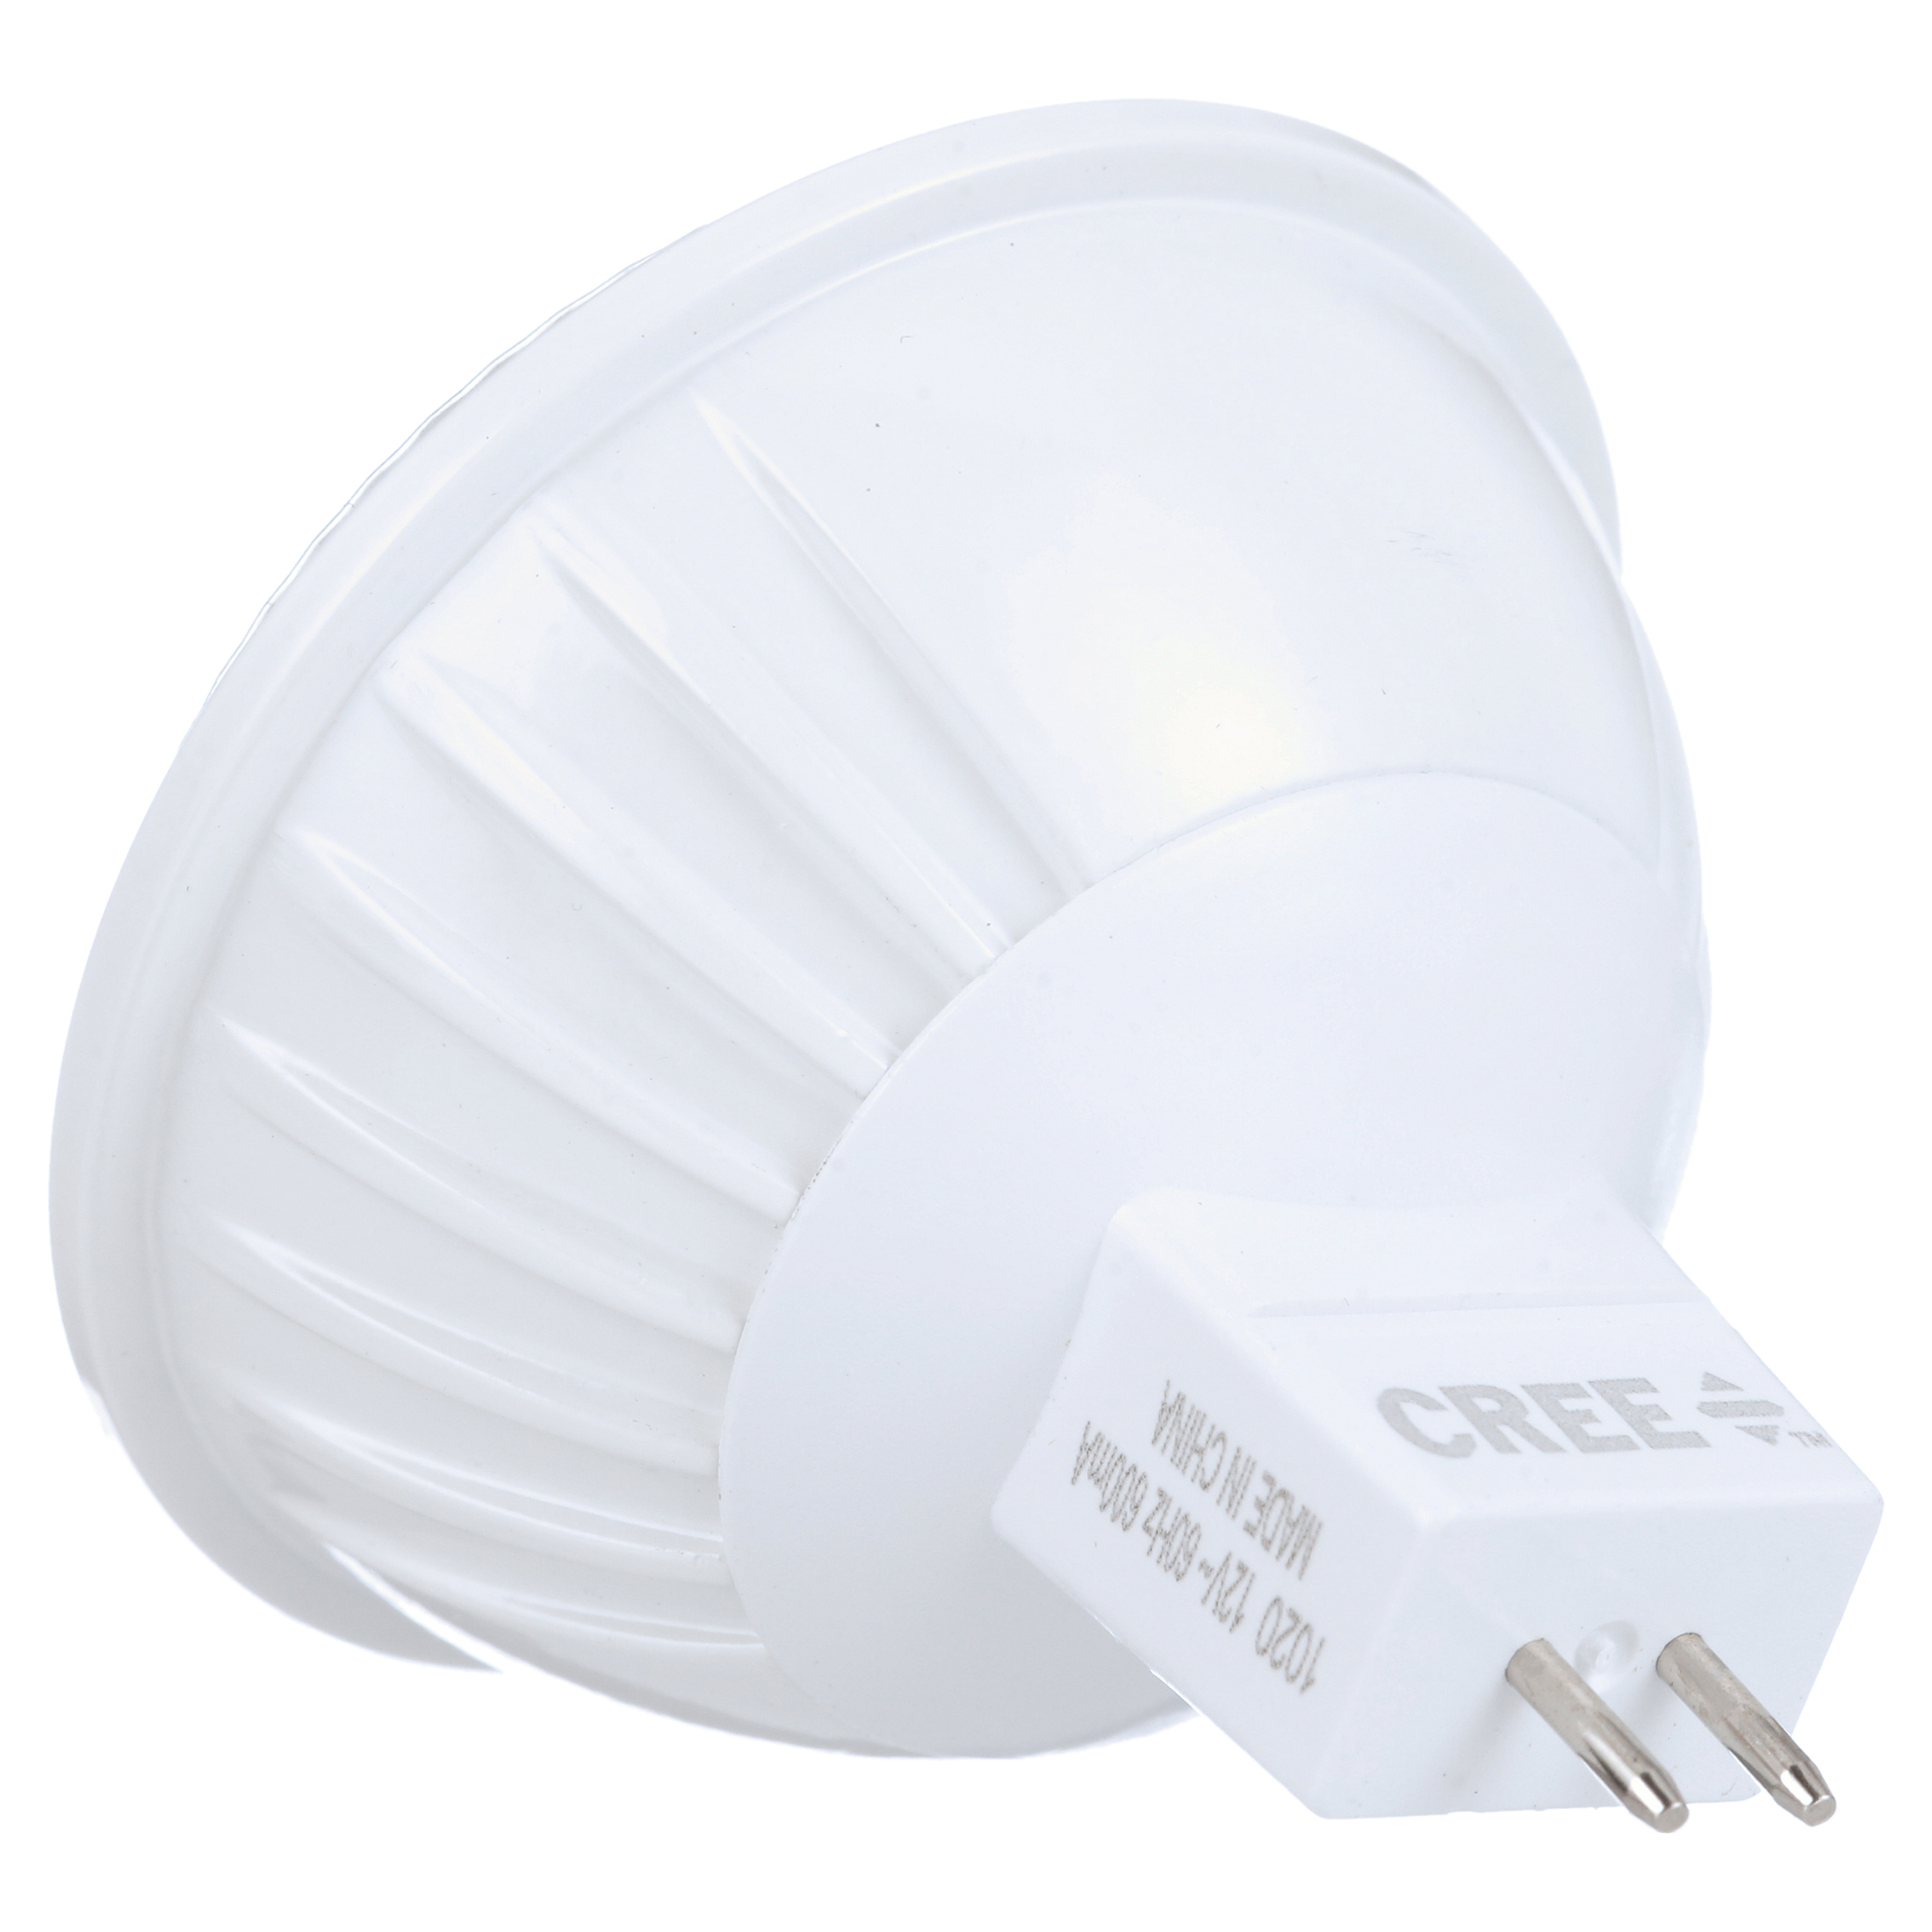 Cree Lighting Pro Series MR16 GU10 50W Equivalent LED Bulb, 35